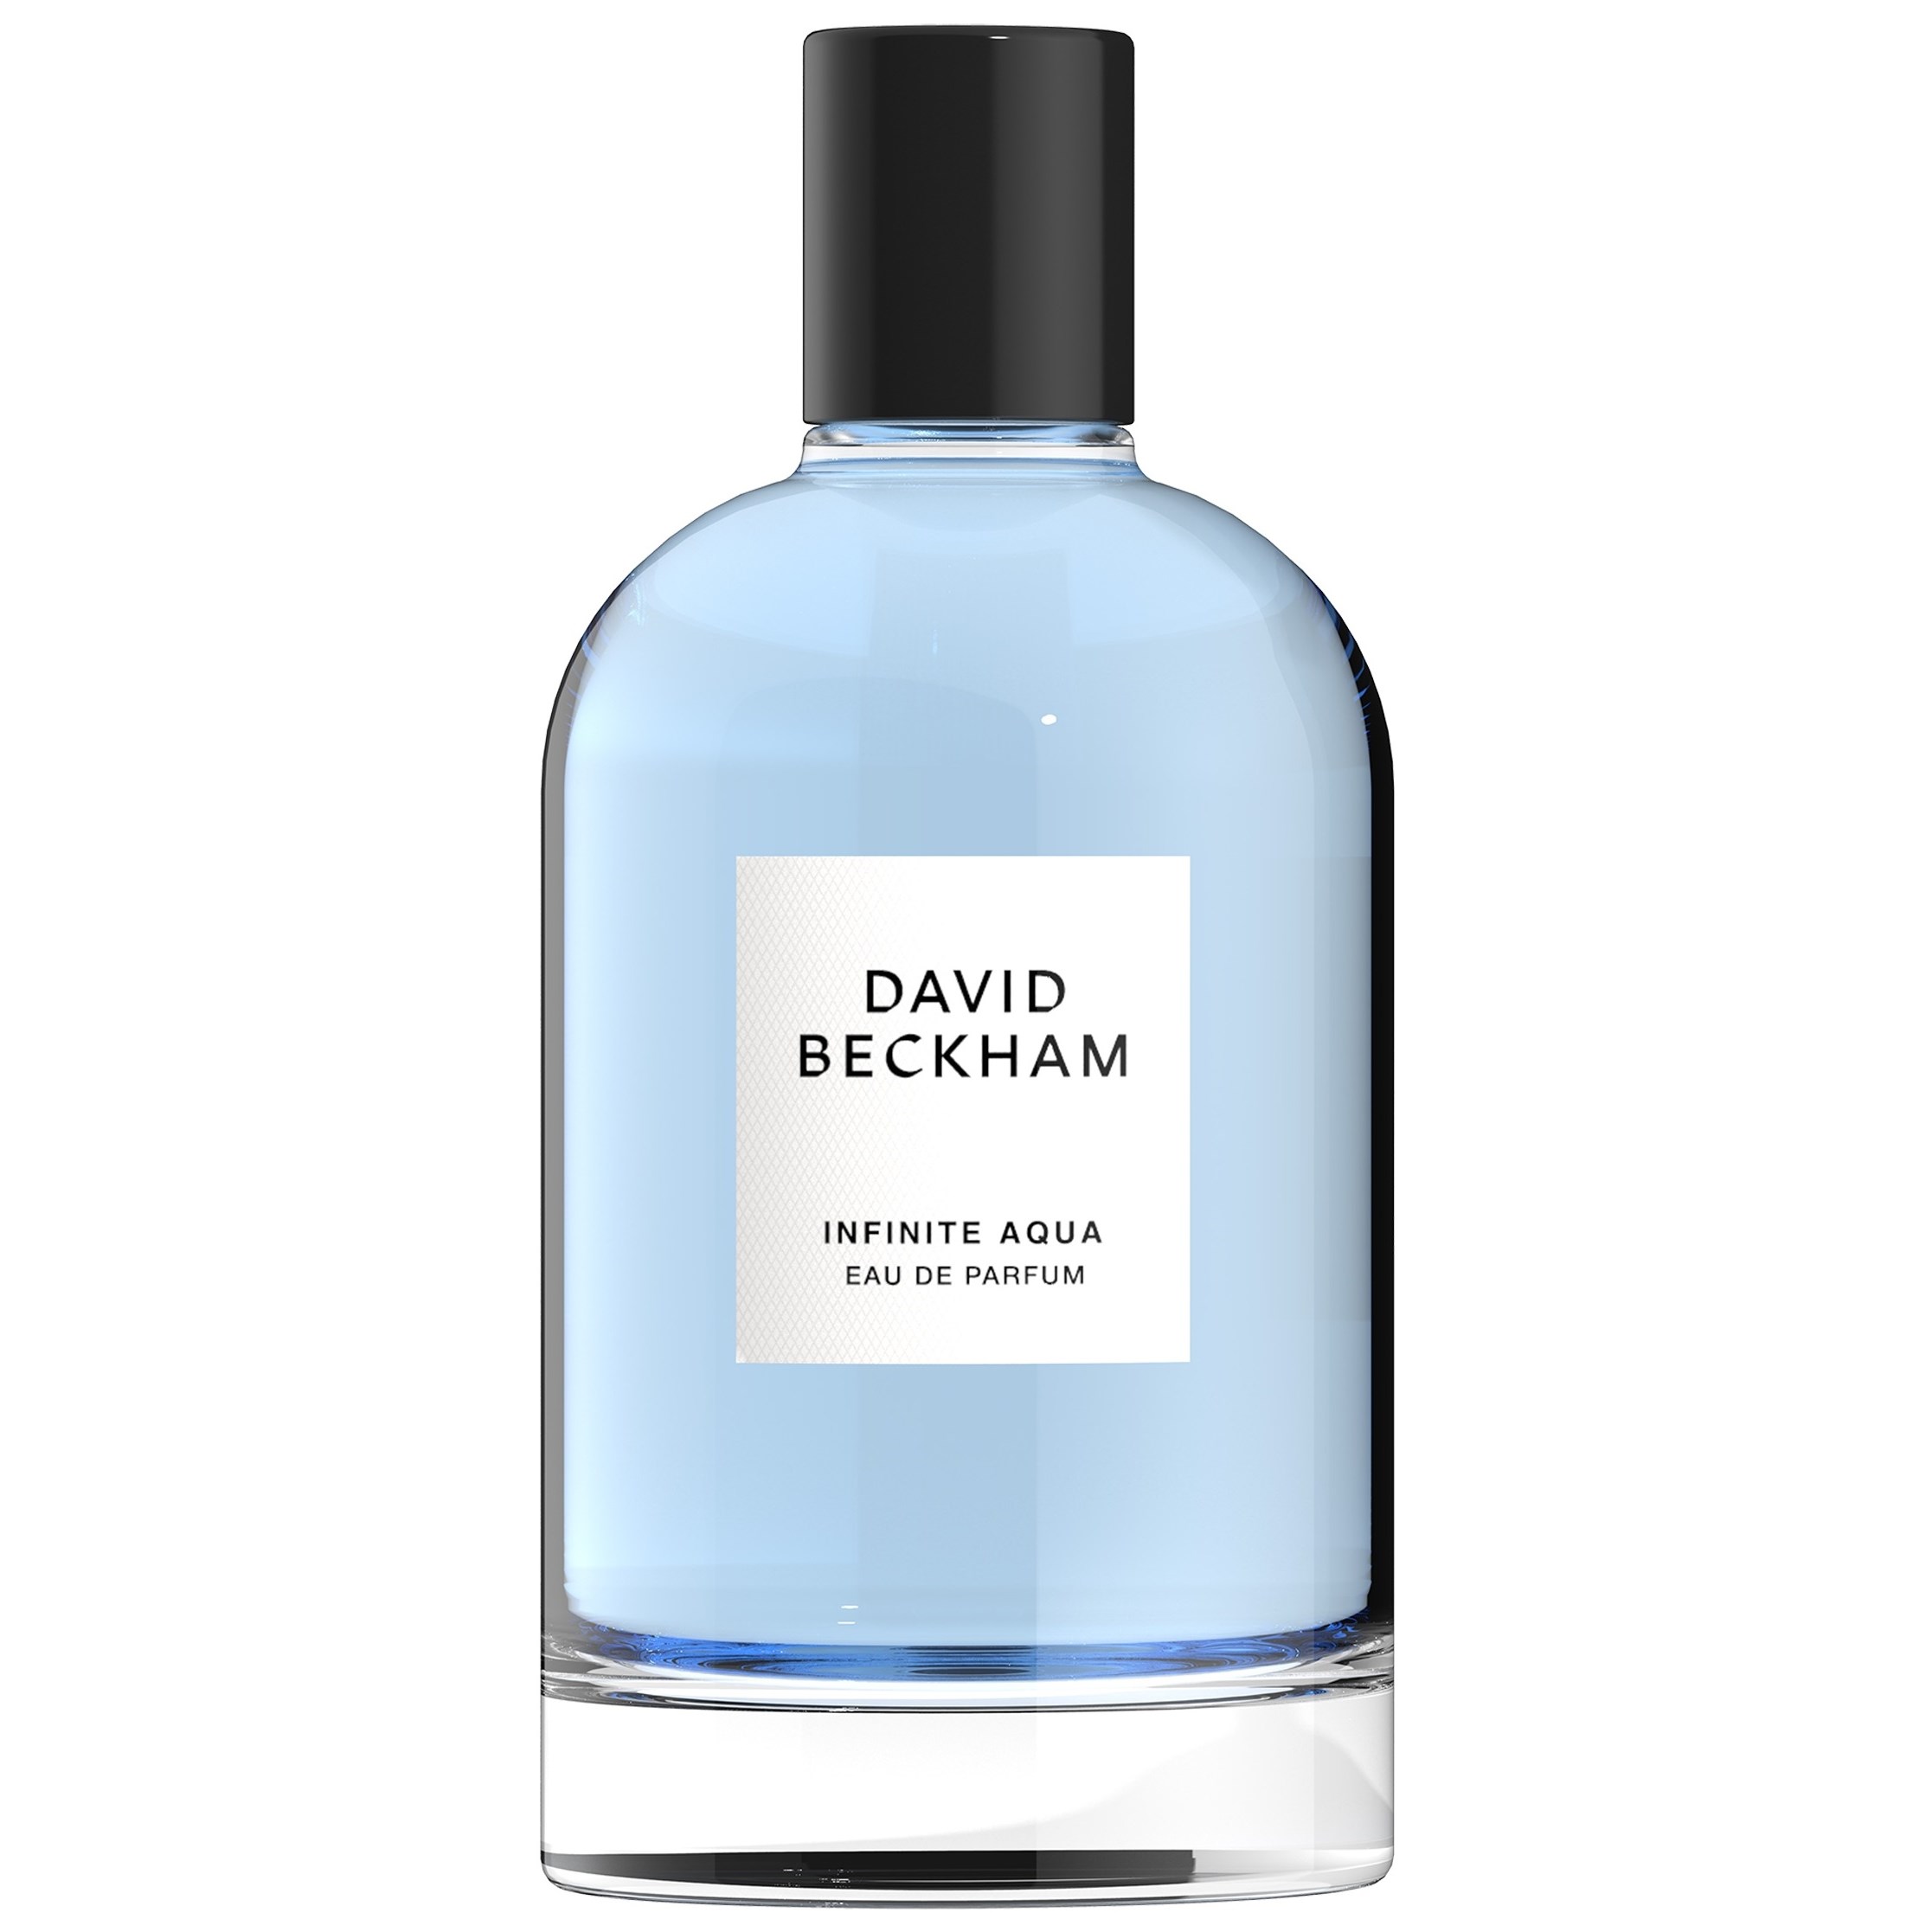 Zdjęcia - Perfuma męska David Beckham Infinite Aqua Eau de Parfum 100 ml 